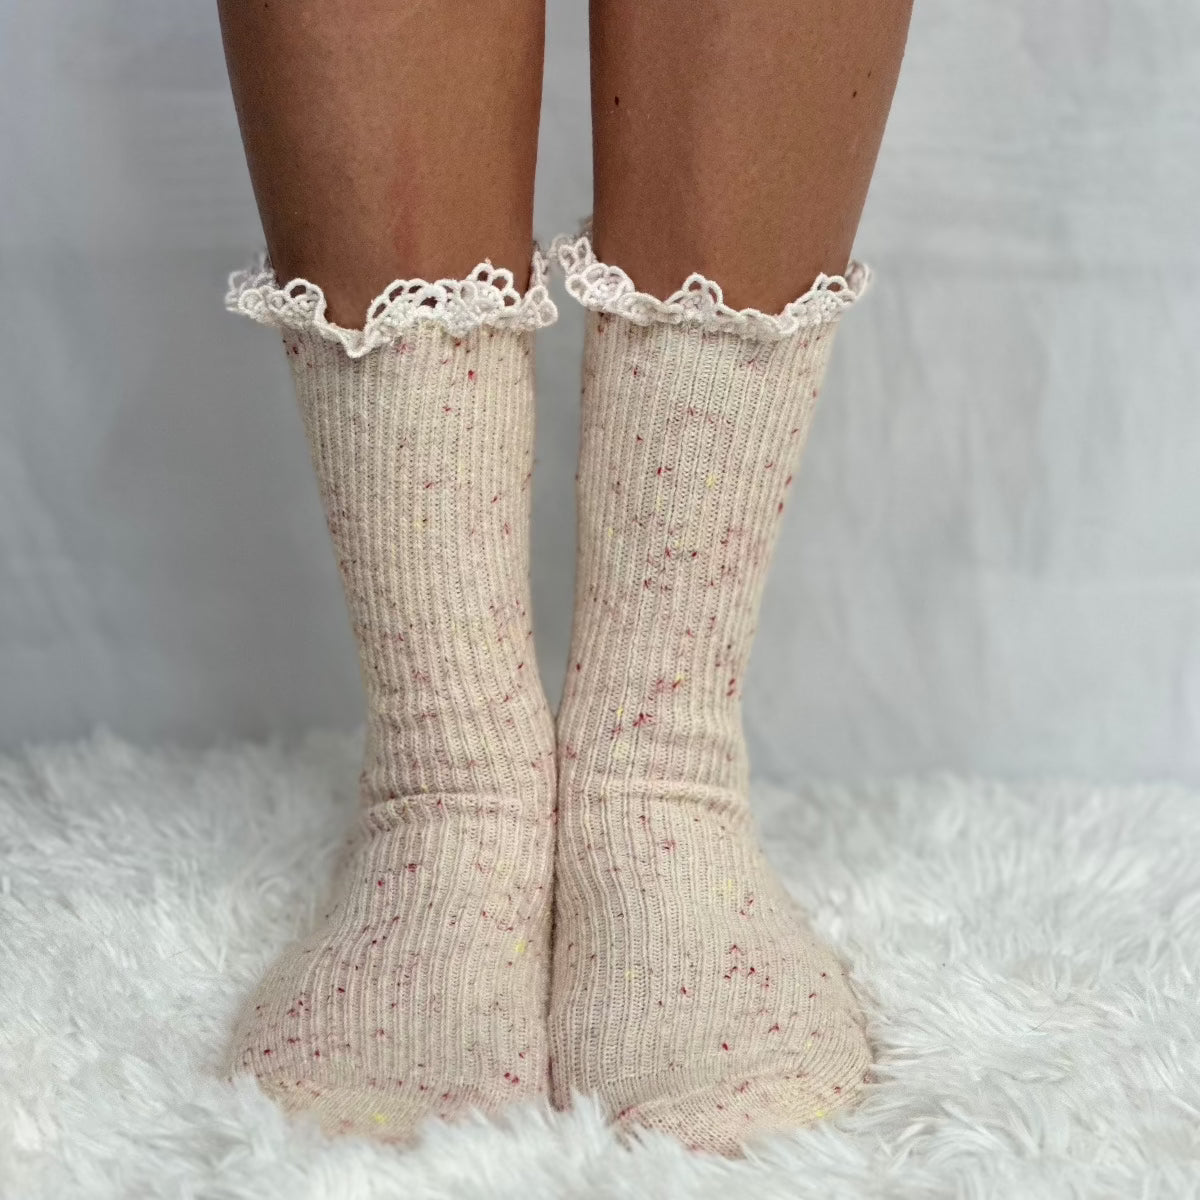 Pastel best quality short boot socks, cute lace ankle socks women’s, designer fashion socks 